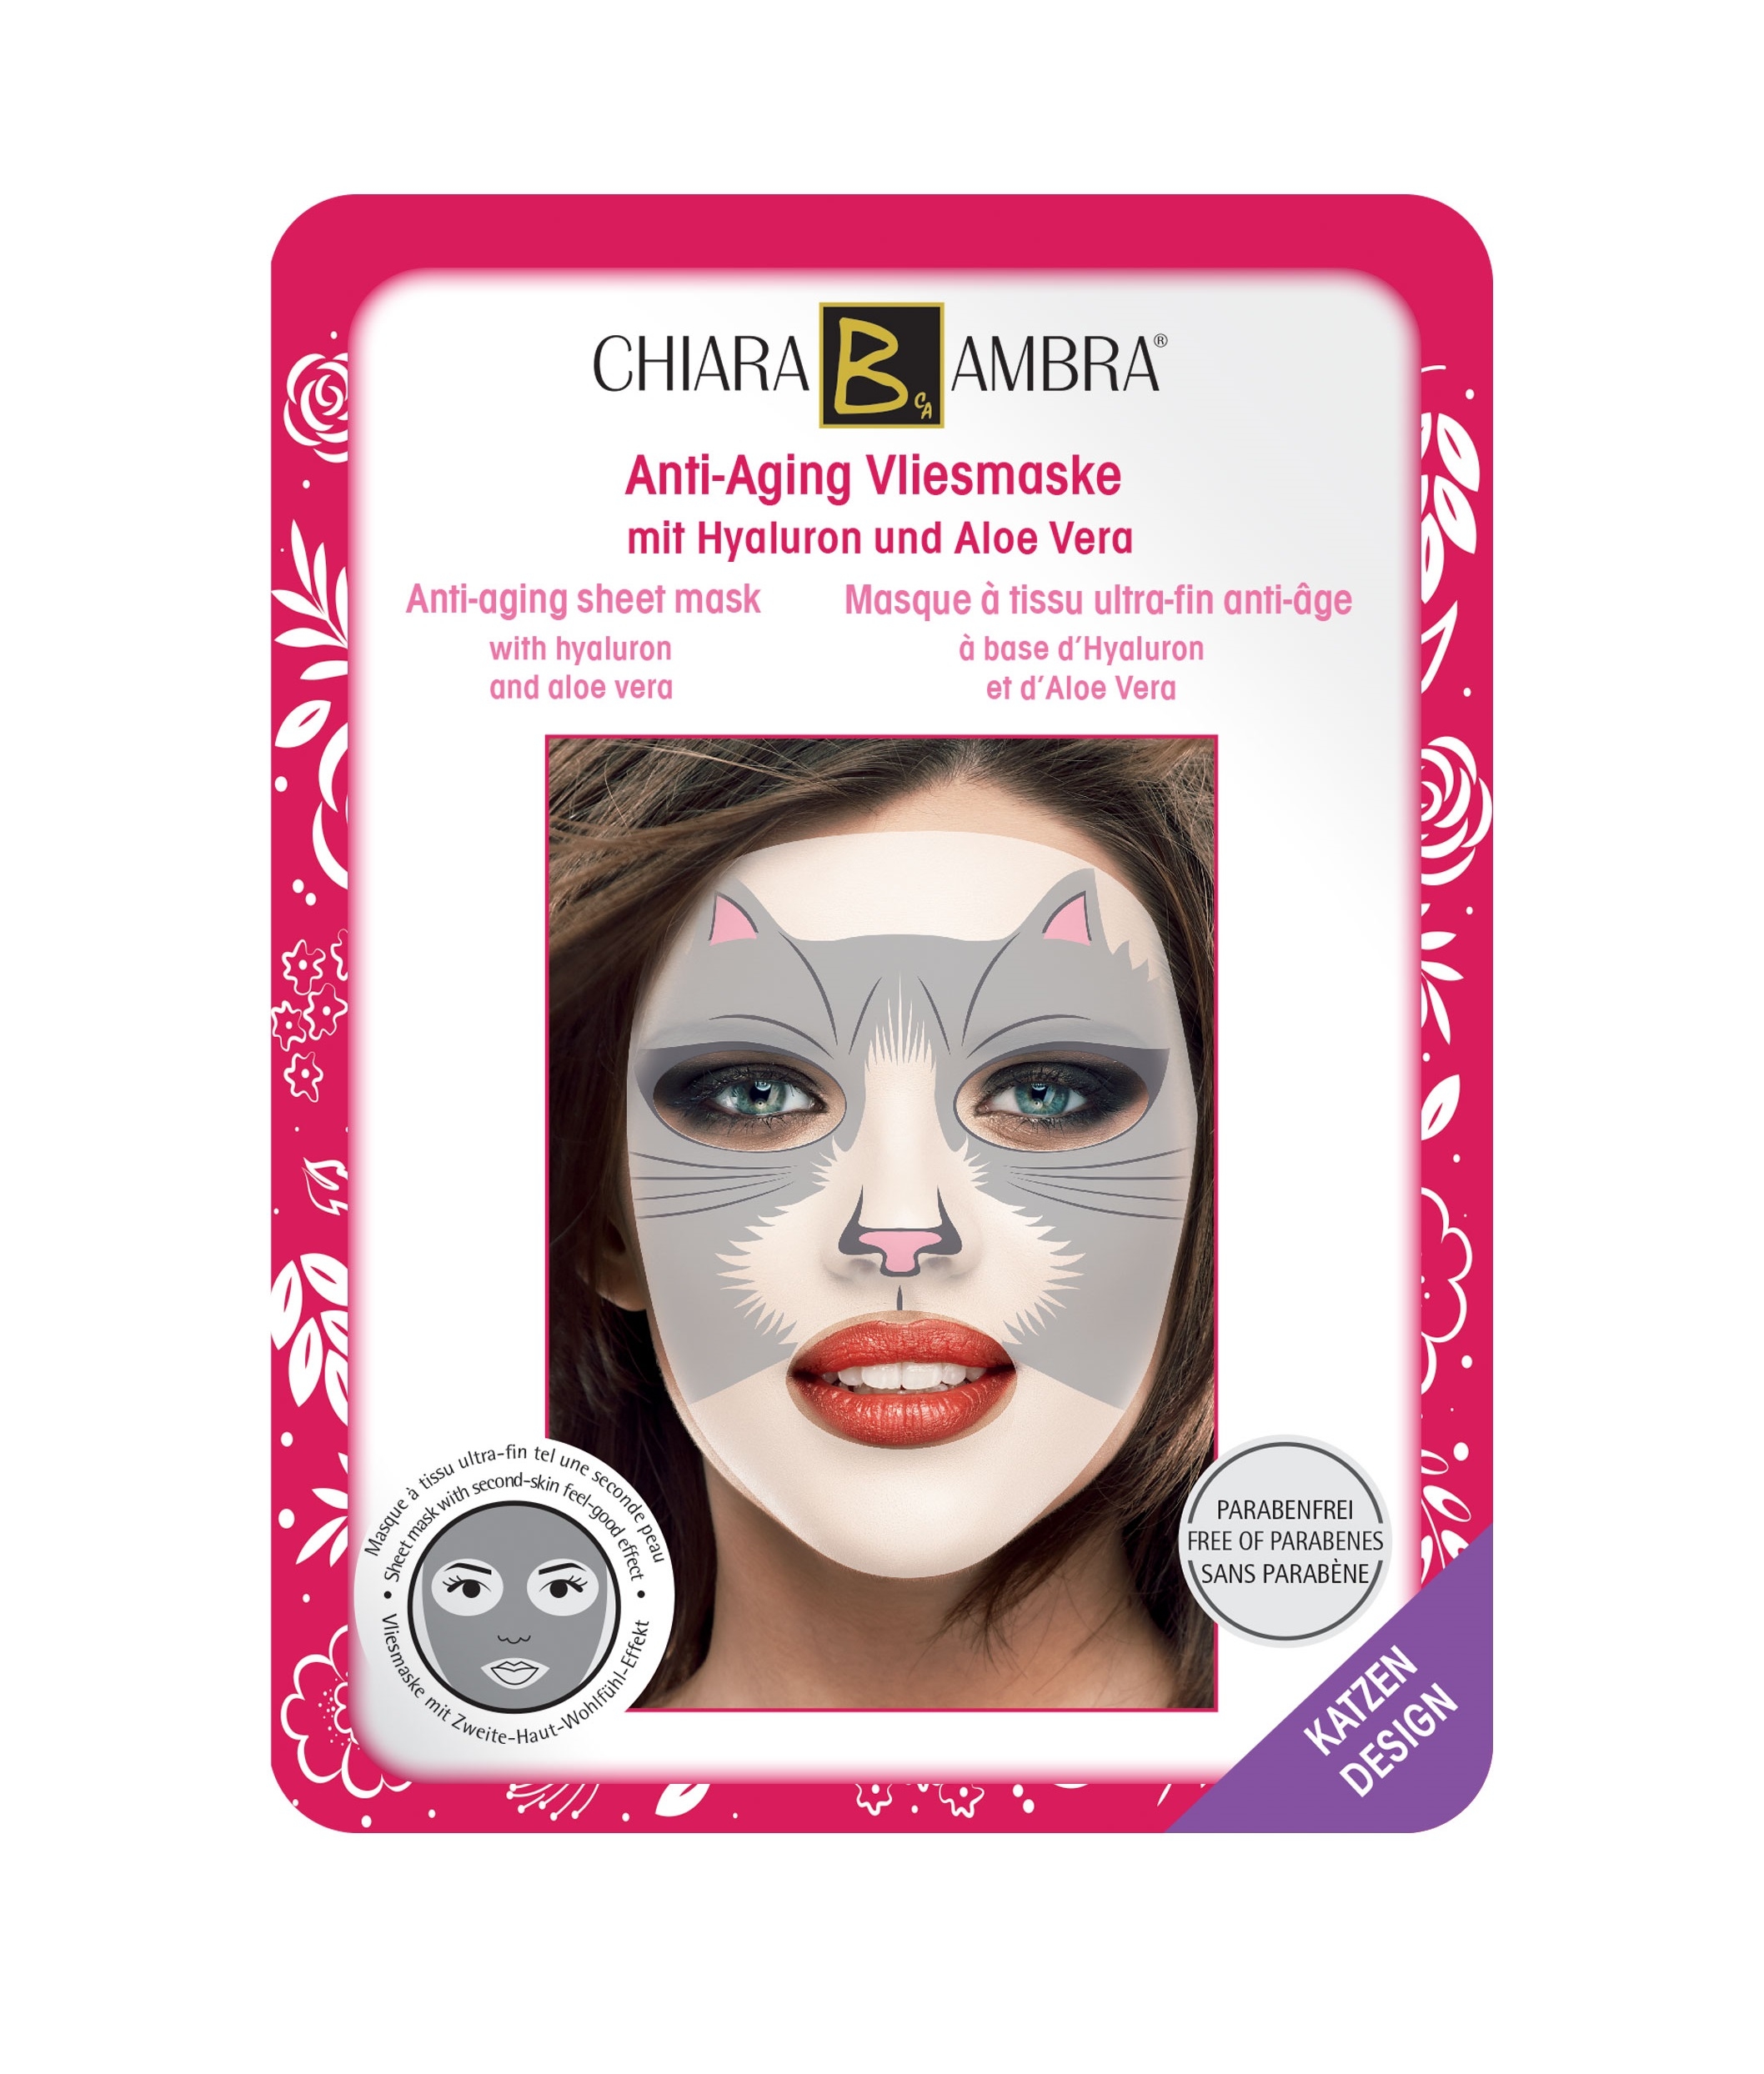 Chiara Ambra Gesichtsmaske im Tierdesign - Katzen Motiv 1 Stk.